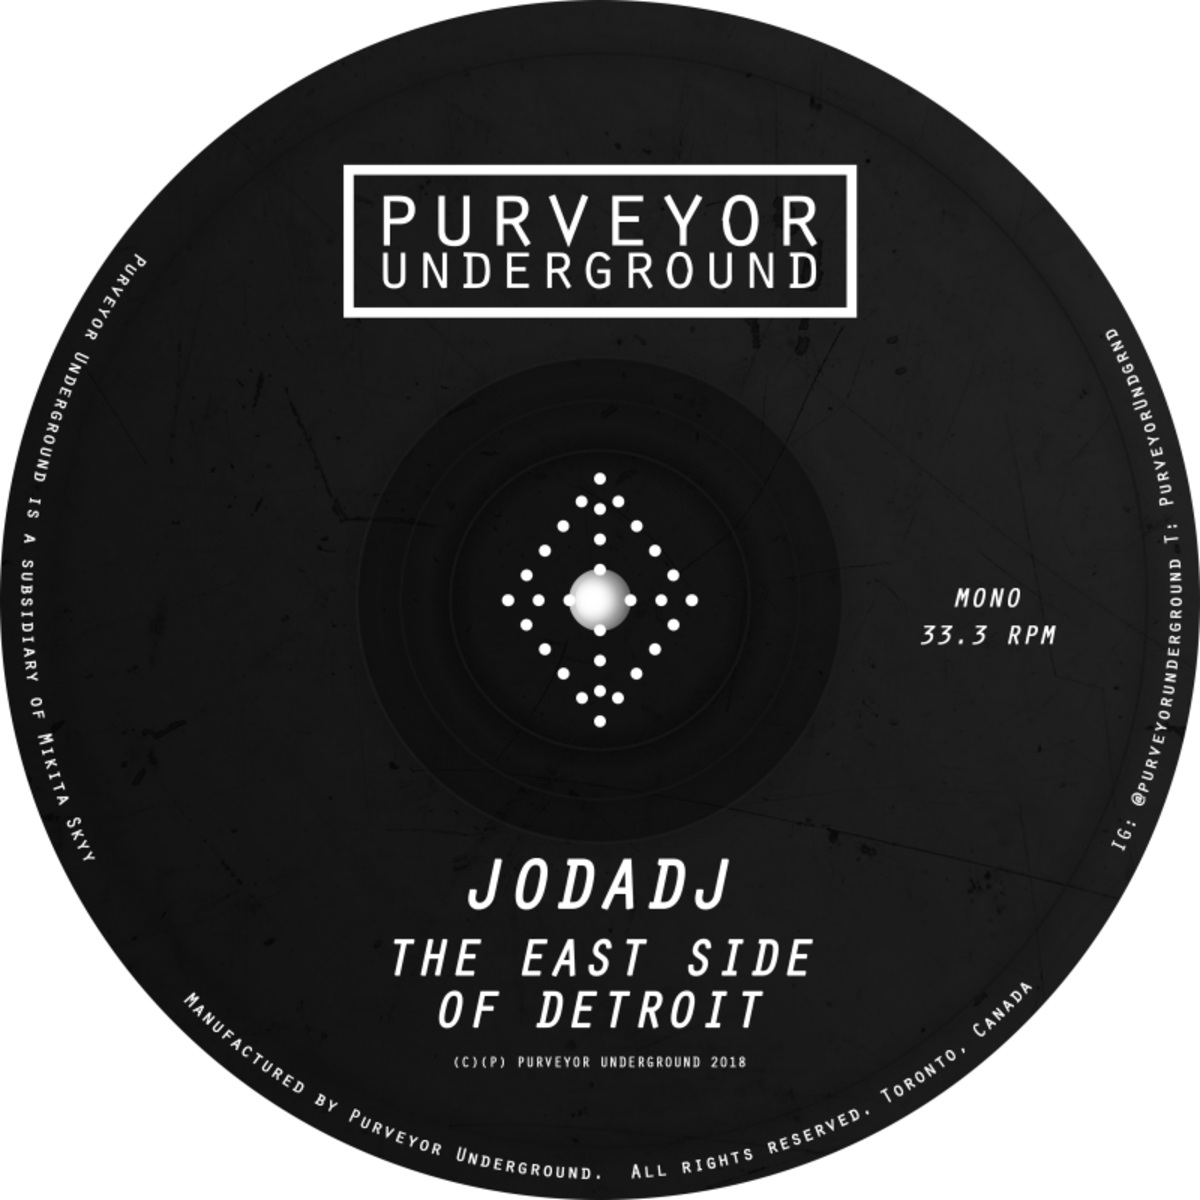 Jodadj - The East Side of Detroit / Purveyor Underground